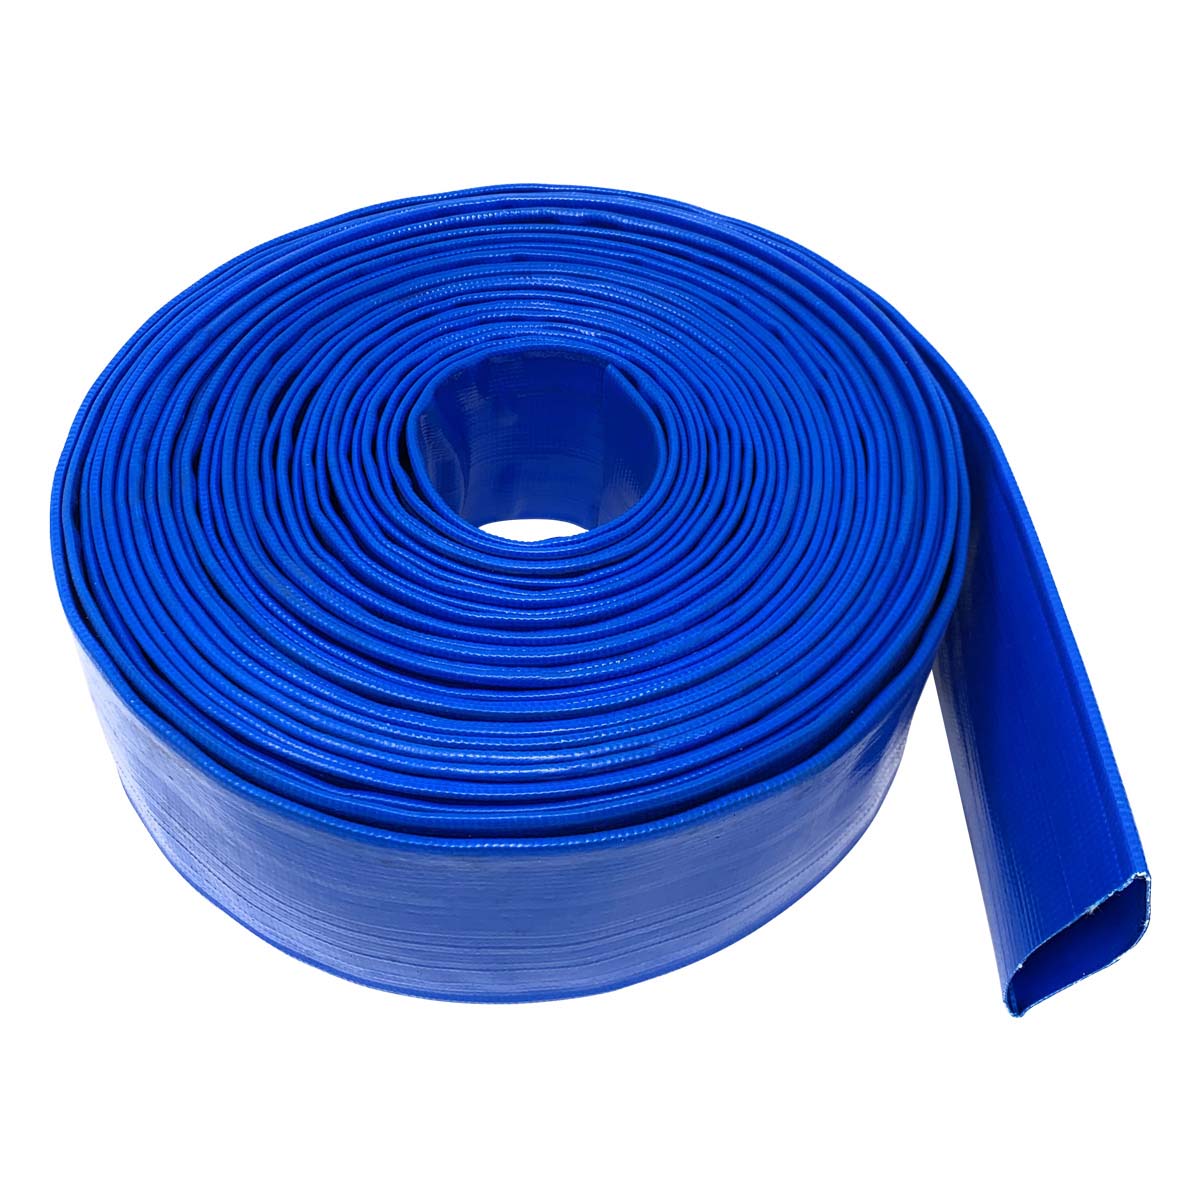 BLUE PVC LAY FLAT DISCHARGE HOSE 4" ID X 300' 